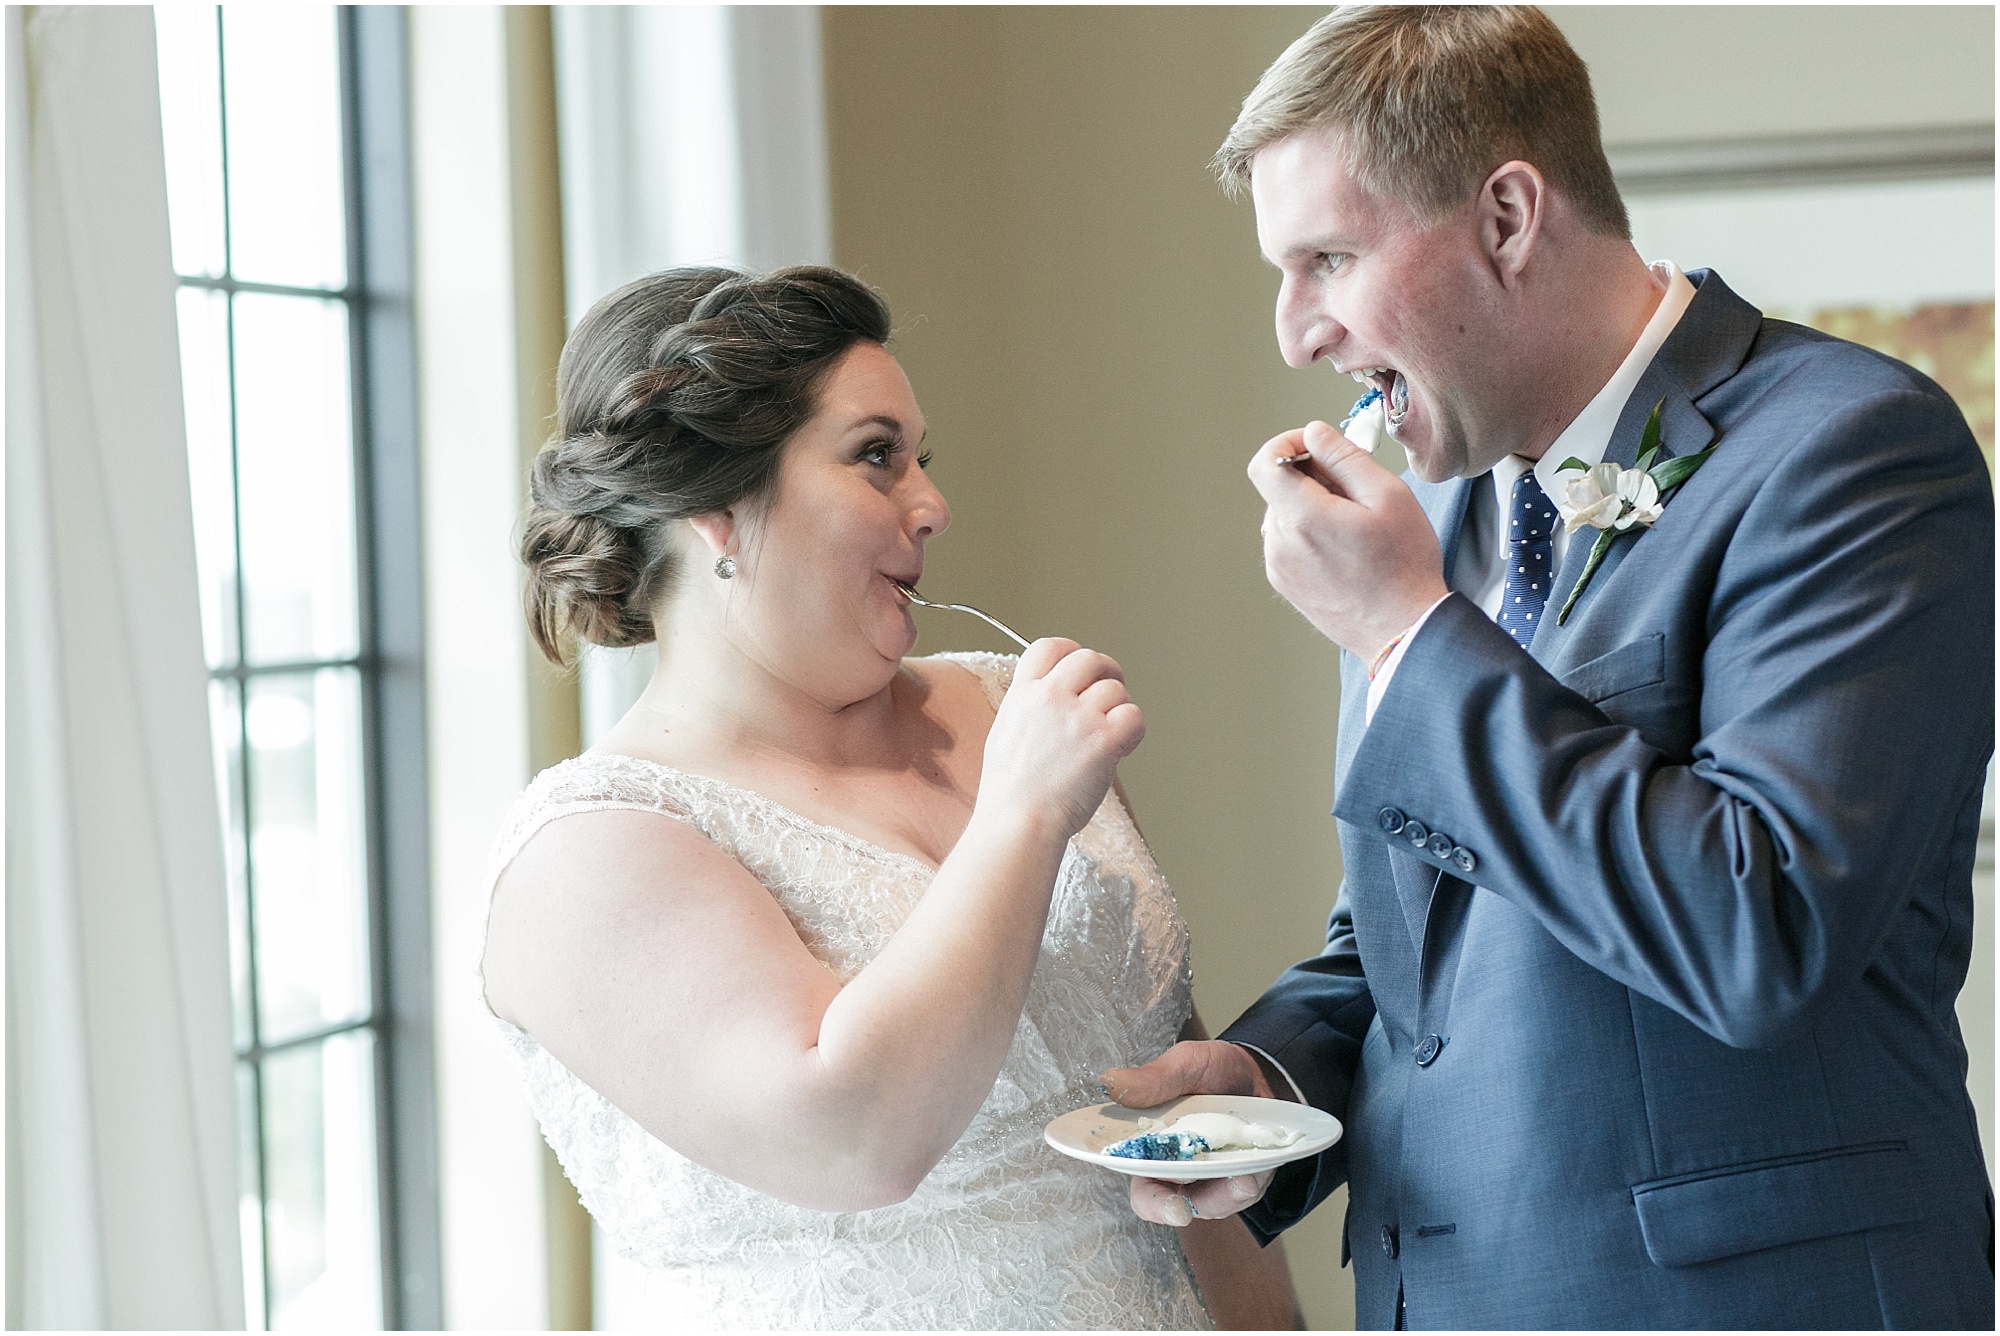 Bride and groom taste their wedding cake together. 